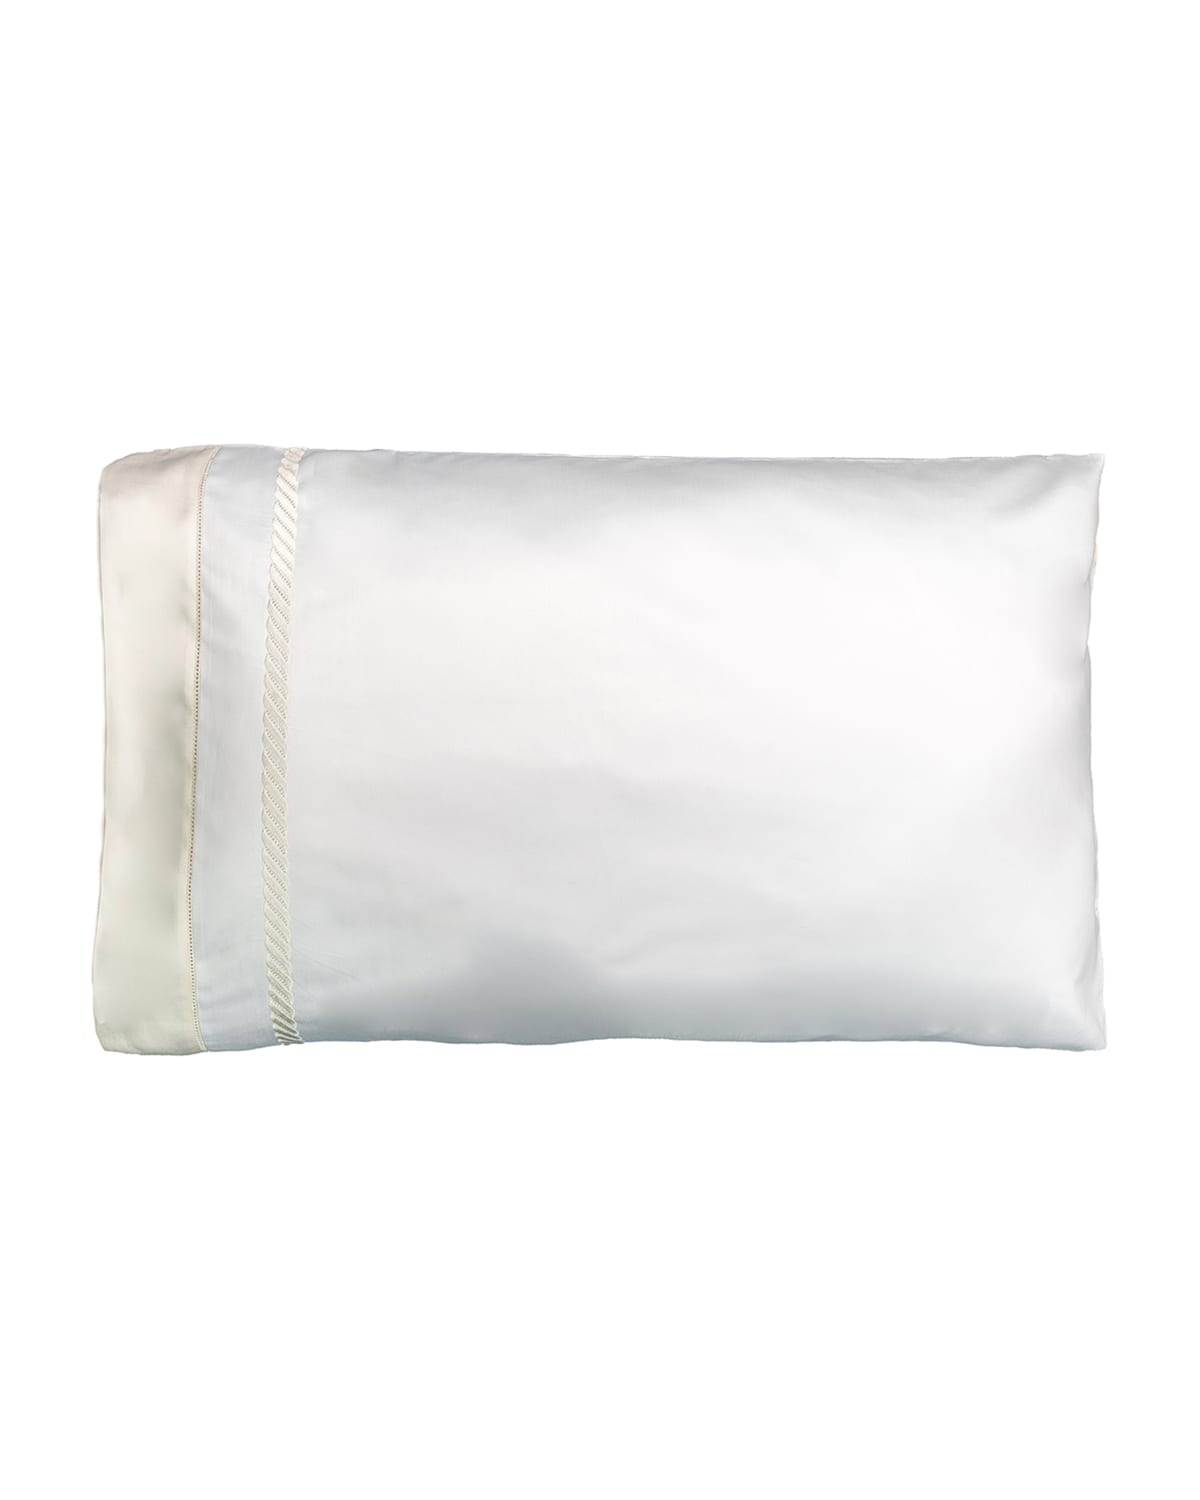 Bovi Fine Linens Simone 2-piece King Pillowcase, White/ivory